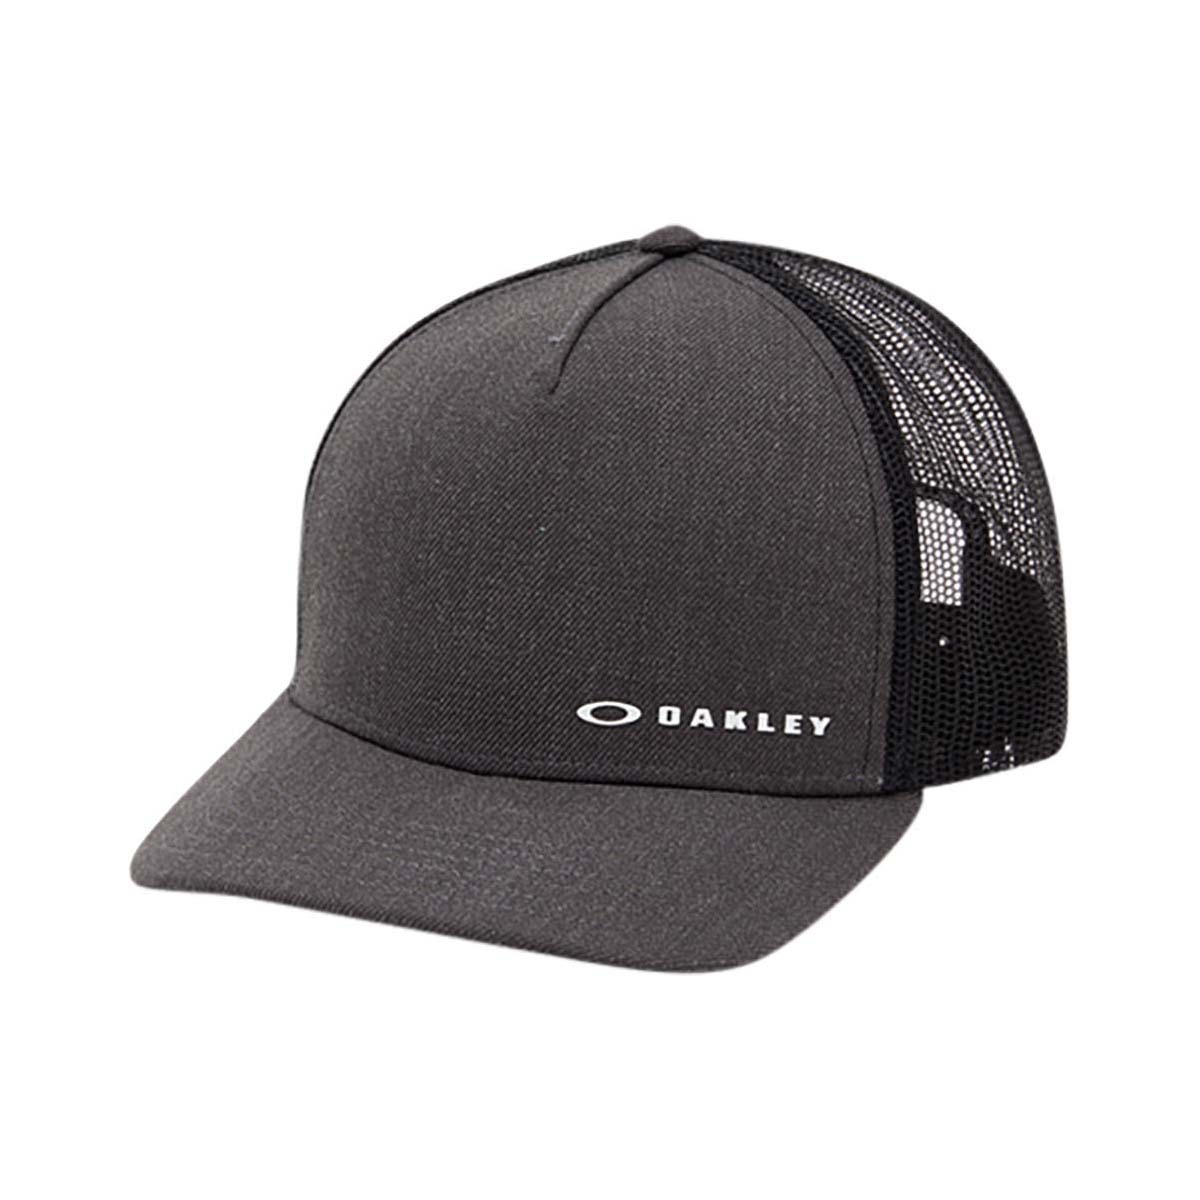 Oakley Unisex Chalten Cap Black